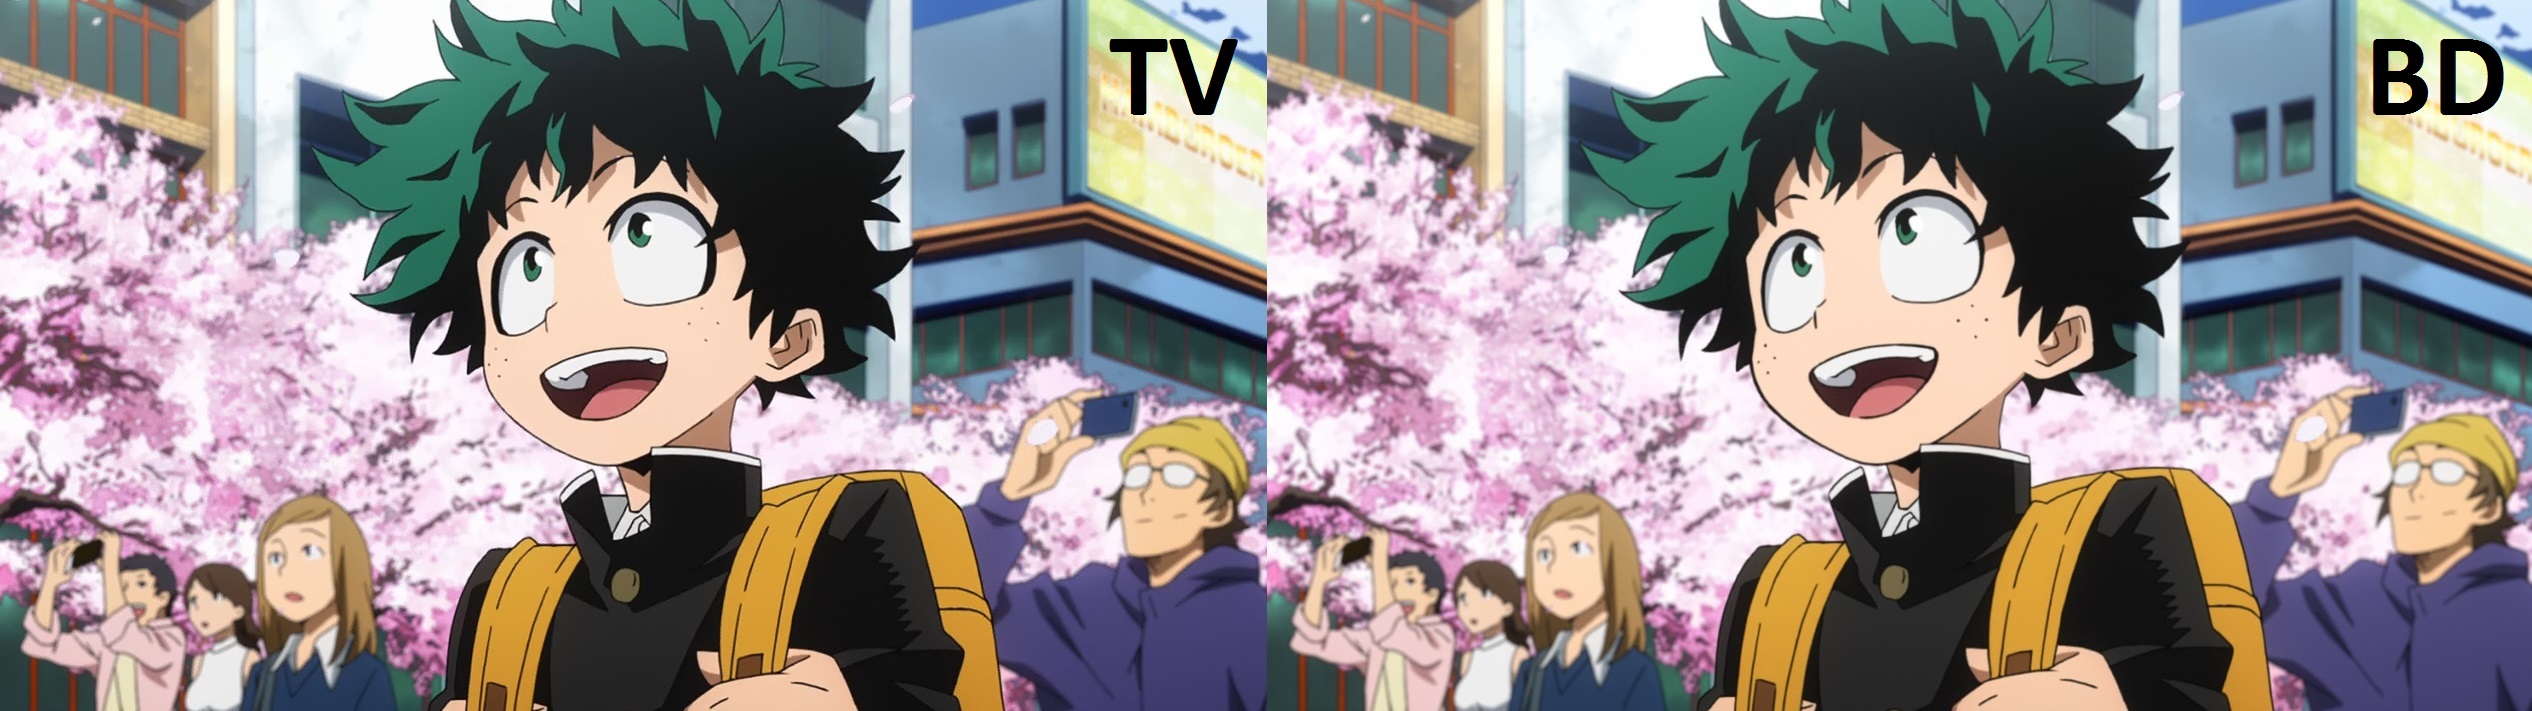 Anime Bd Versions Anime Season 2 Tv Vs Bluray Comparison Bokunoheroacademia...